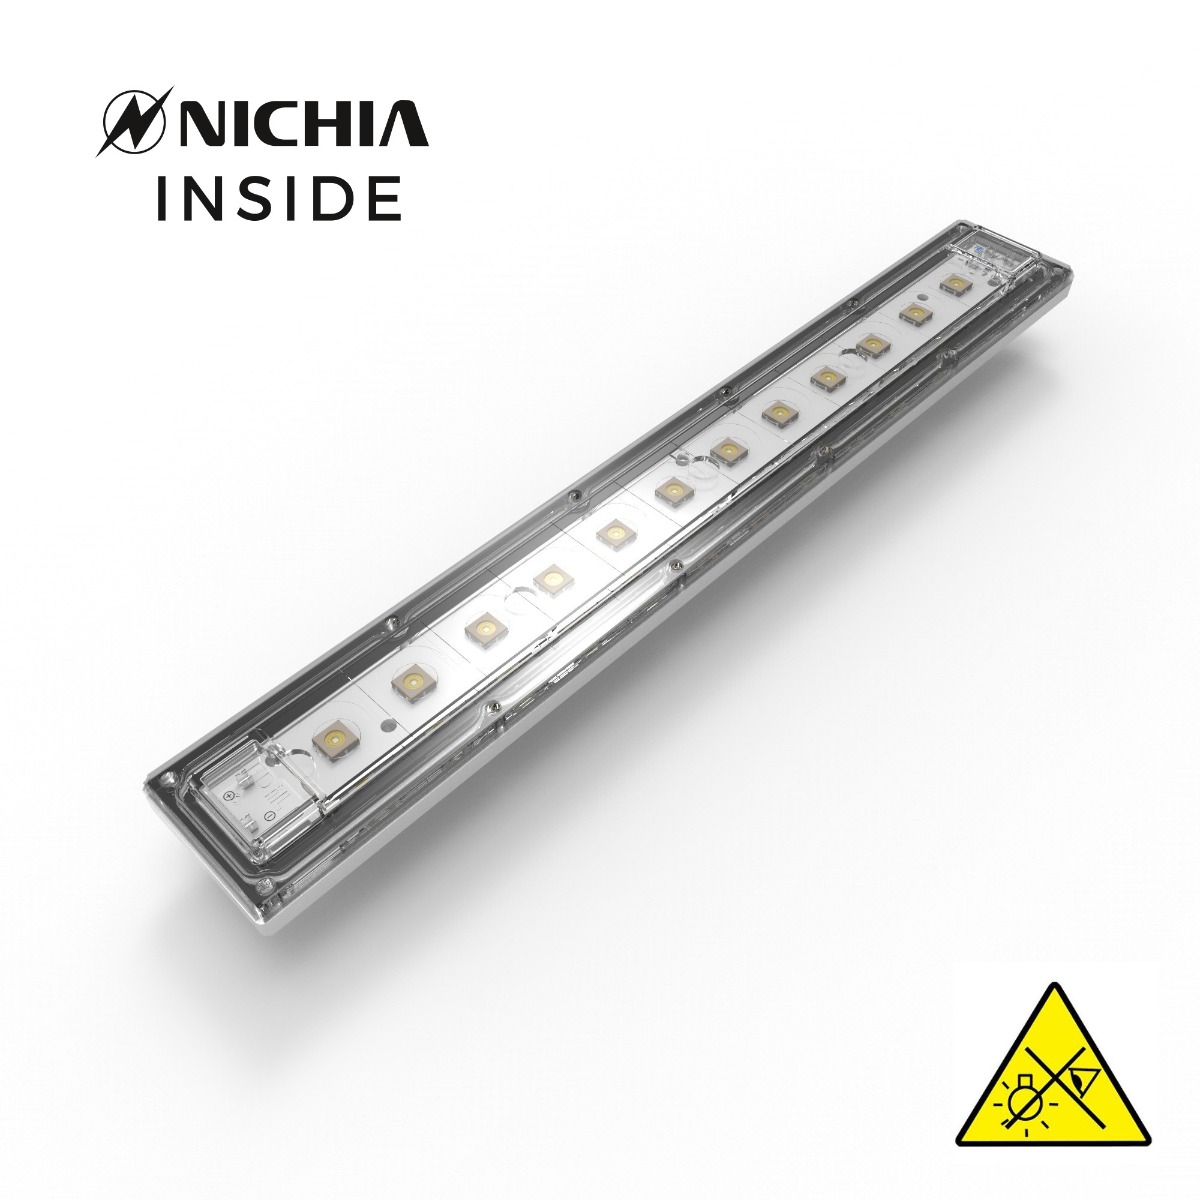 Violet UVC Nichia LED Module 280nm 12 NCSU334B LED-uri 882mW 29cm 1050mA IP67 pentru dezinfecție și sterilizare